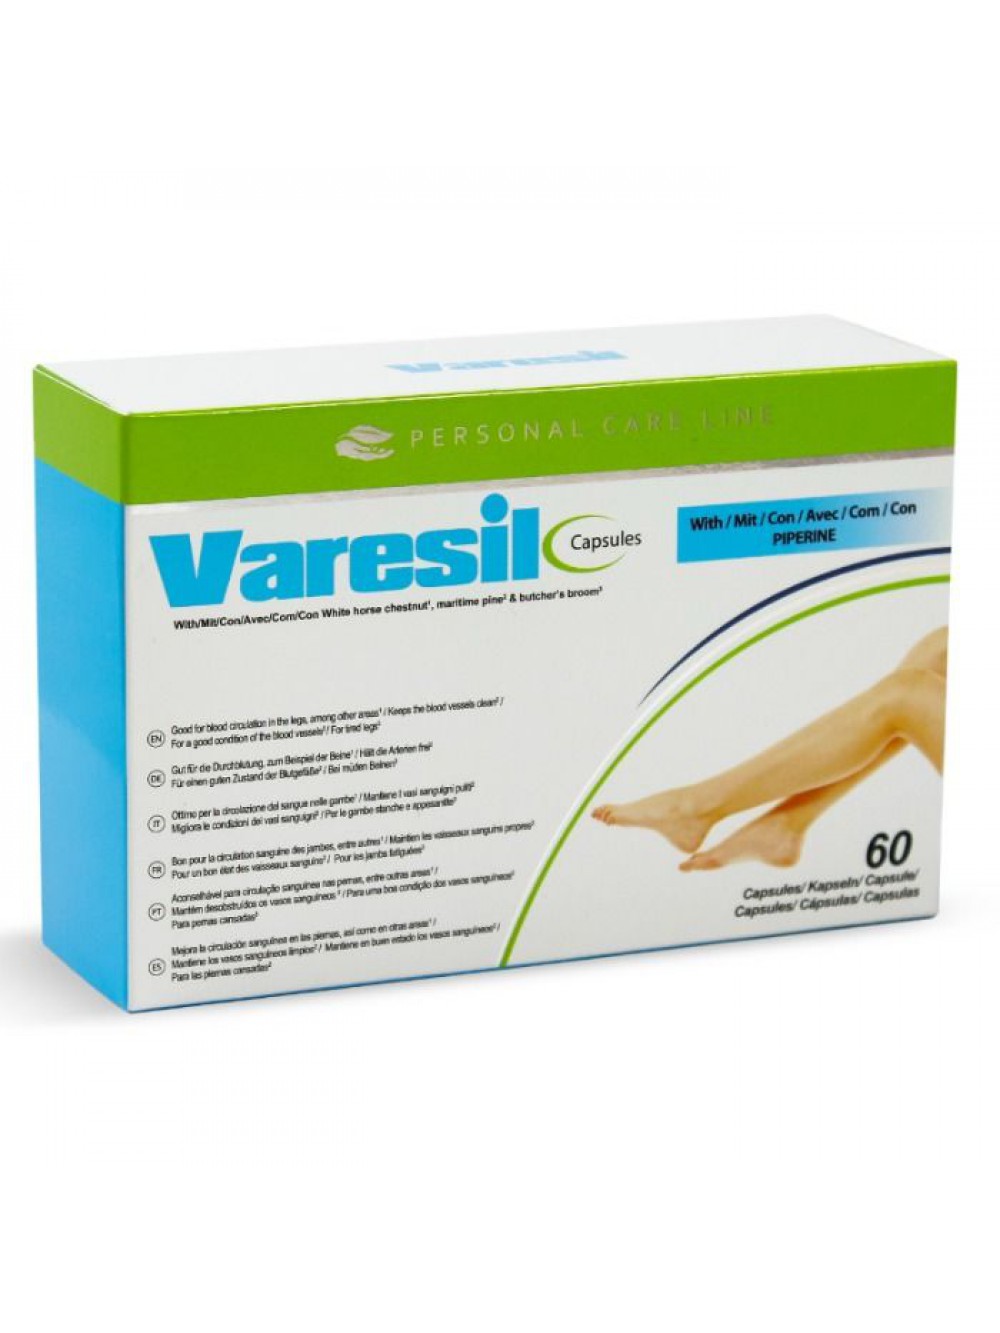 Varici - Varesil Pills: Pillole per prevenire le varici